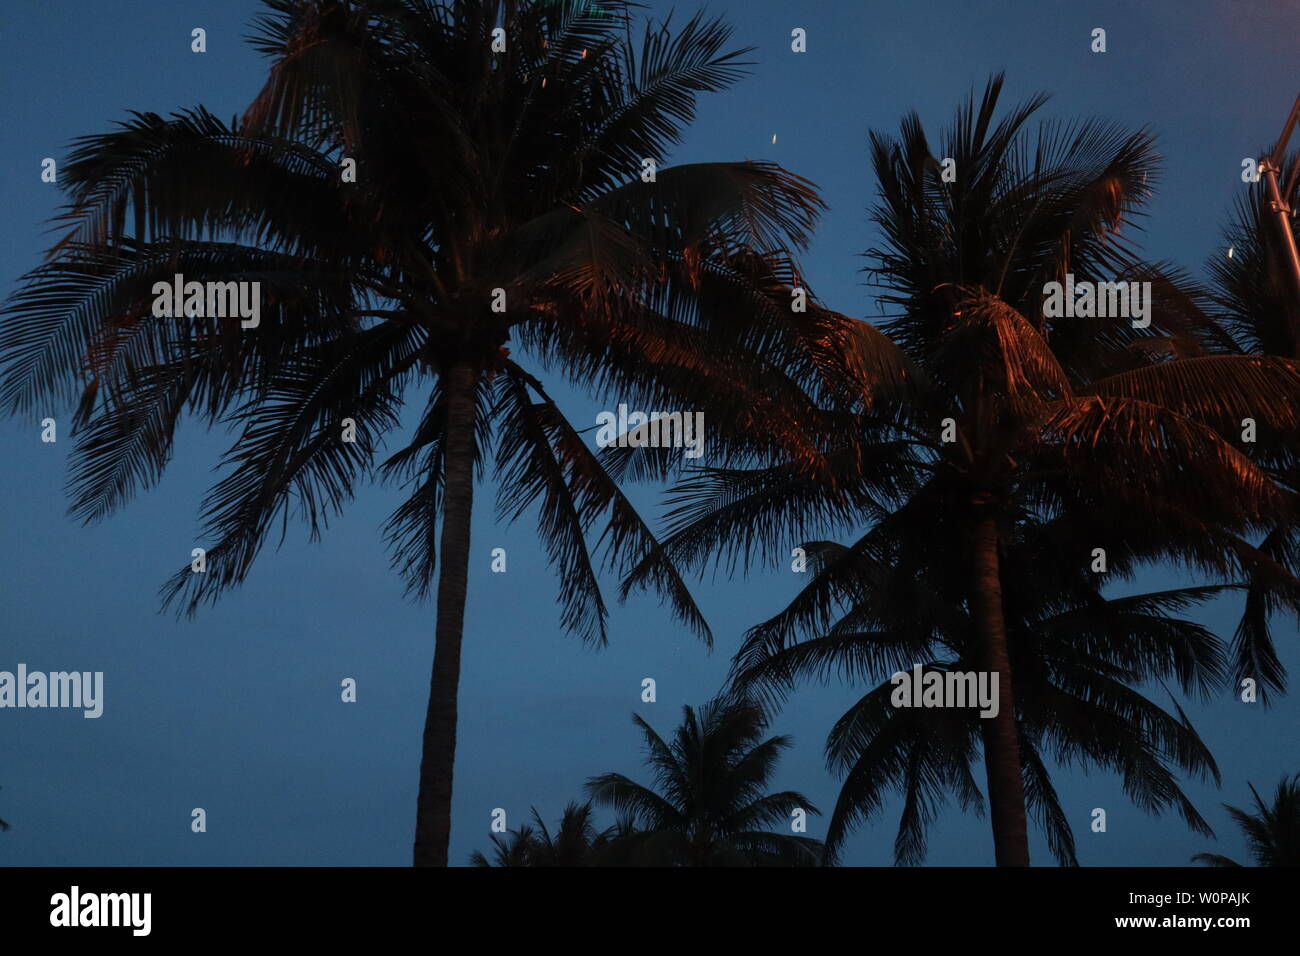 Palm trees at night Stock Photo